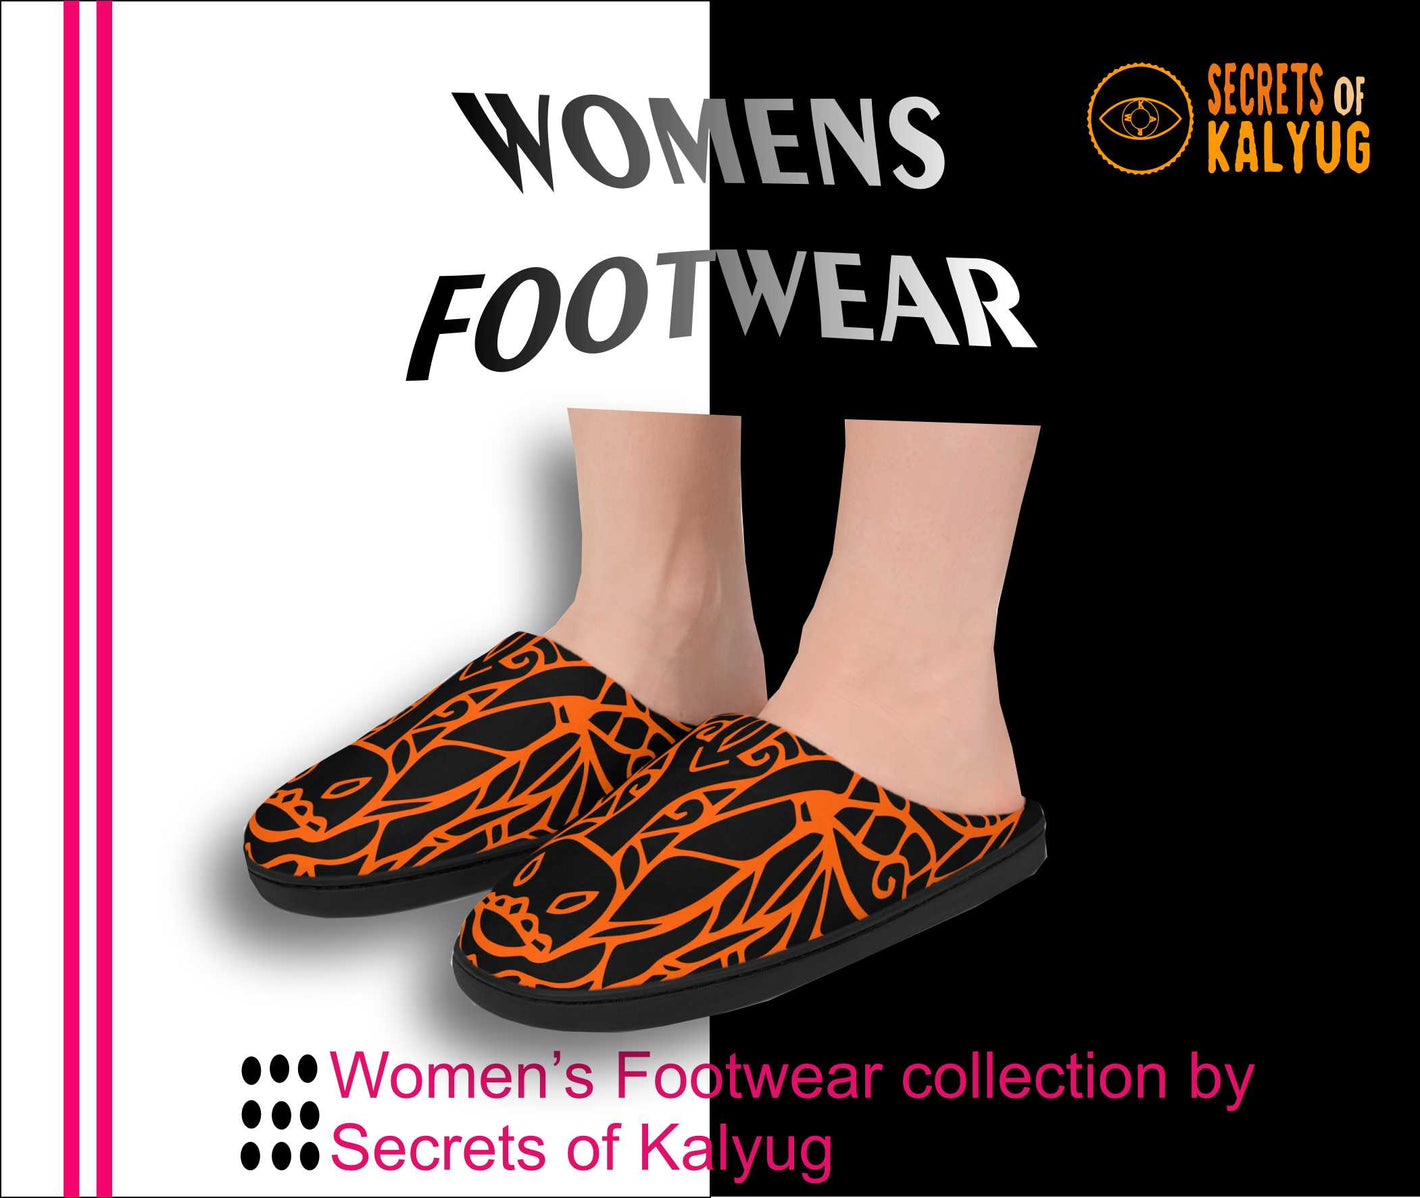 Women's footwear collection by Secrets of Kalyug